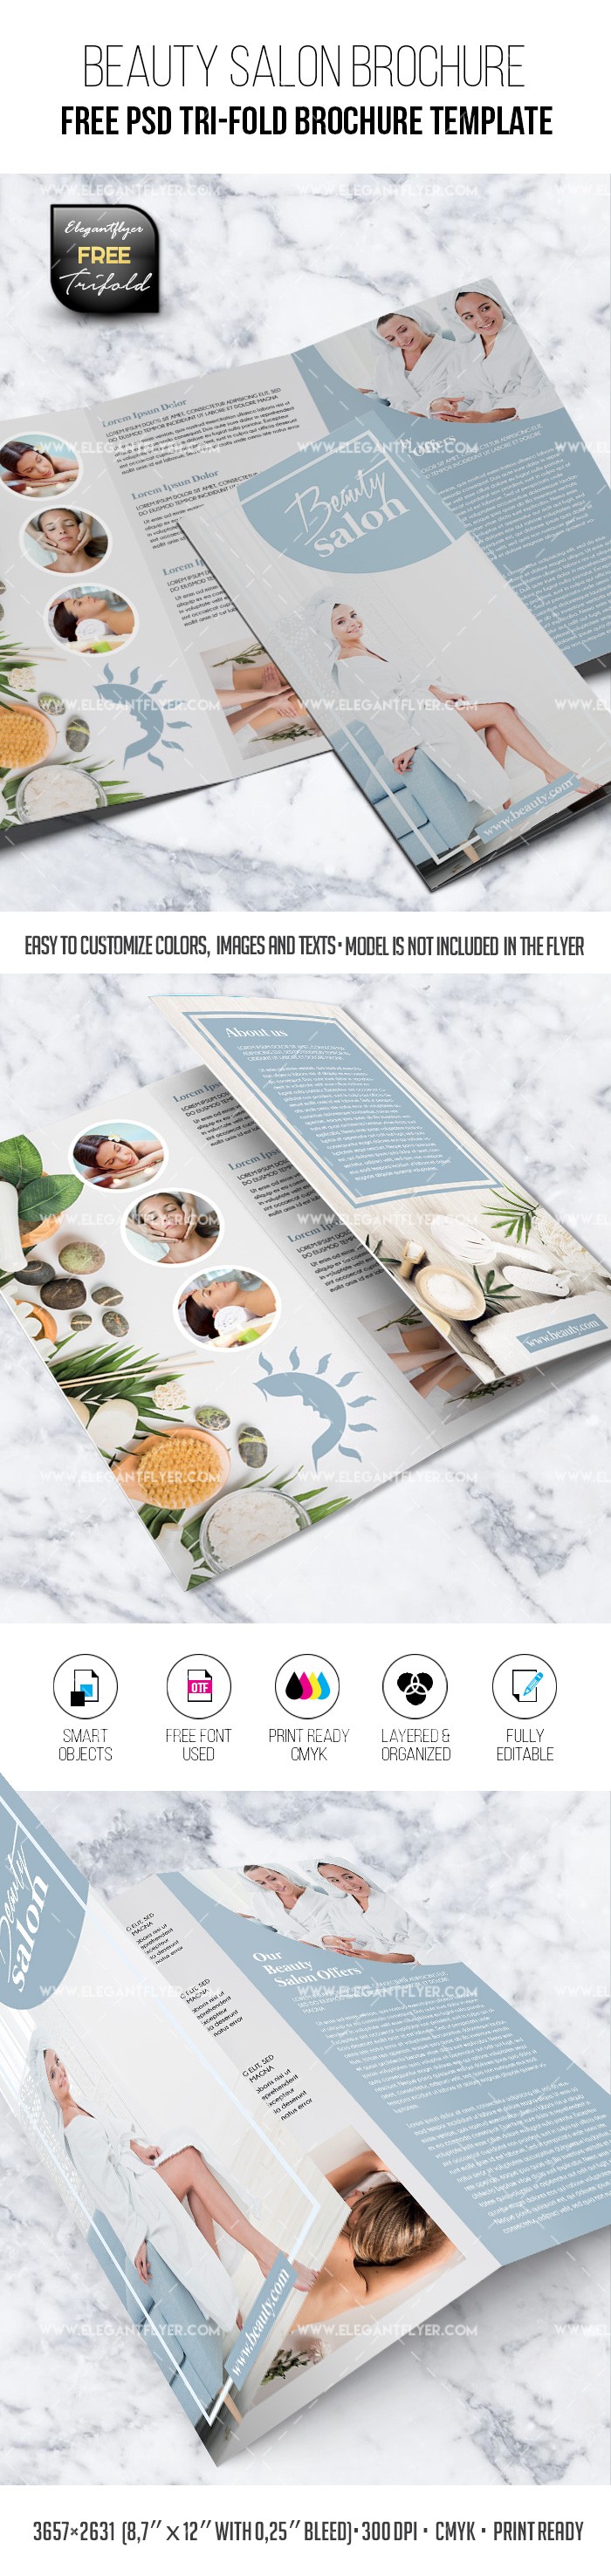 Beauty Salon Tri-Fold Brochure by ElegantFlyer